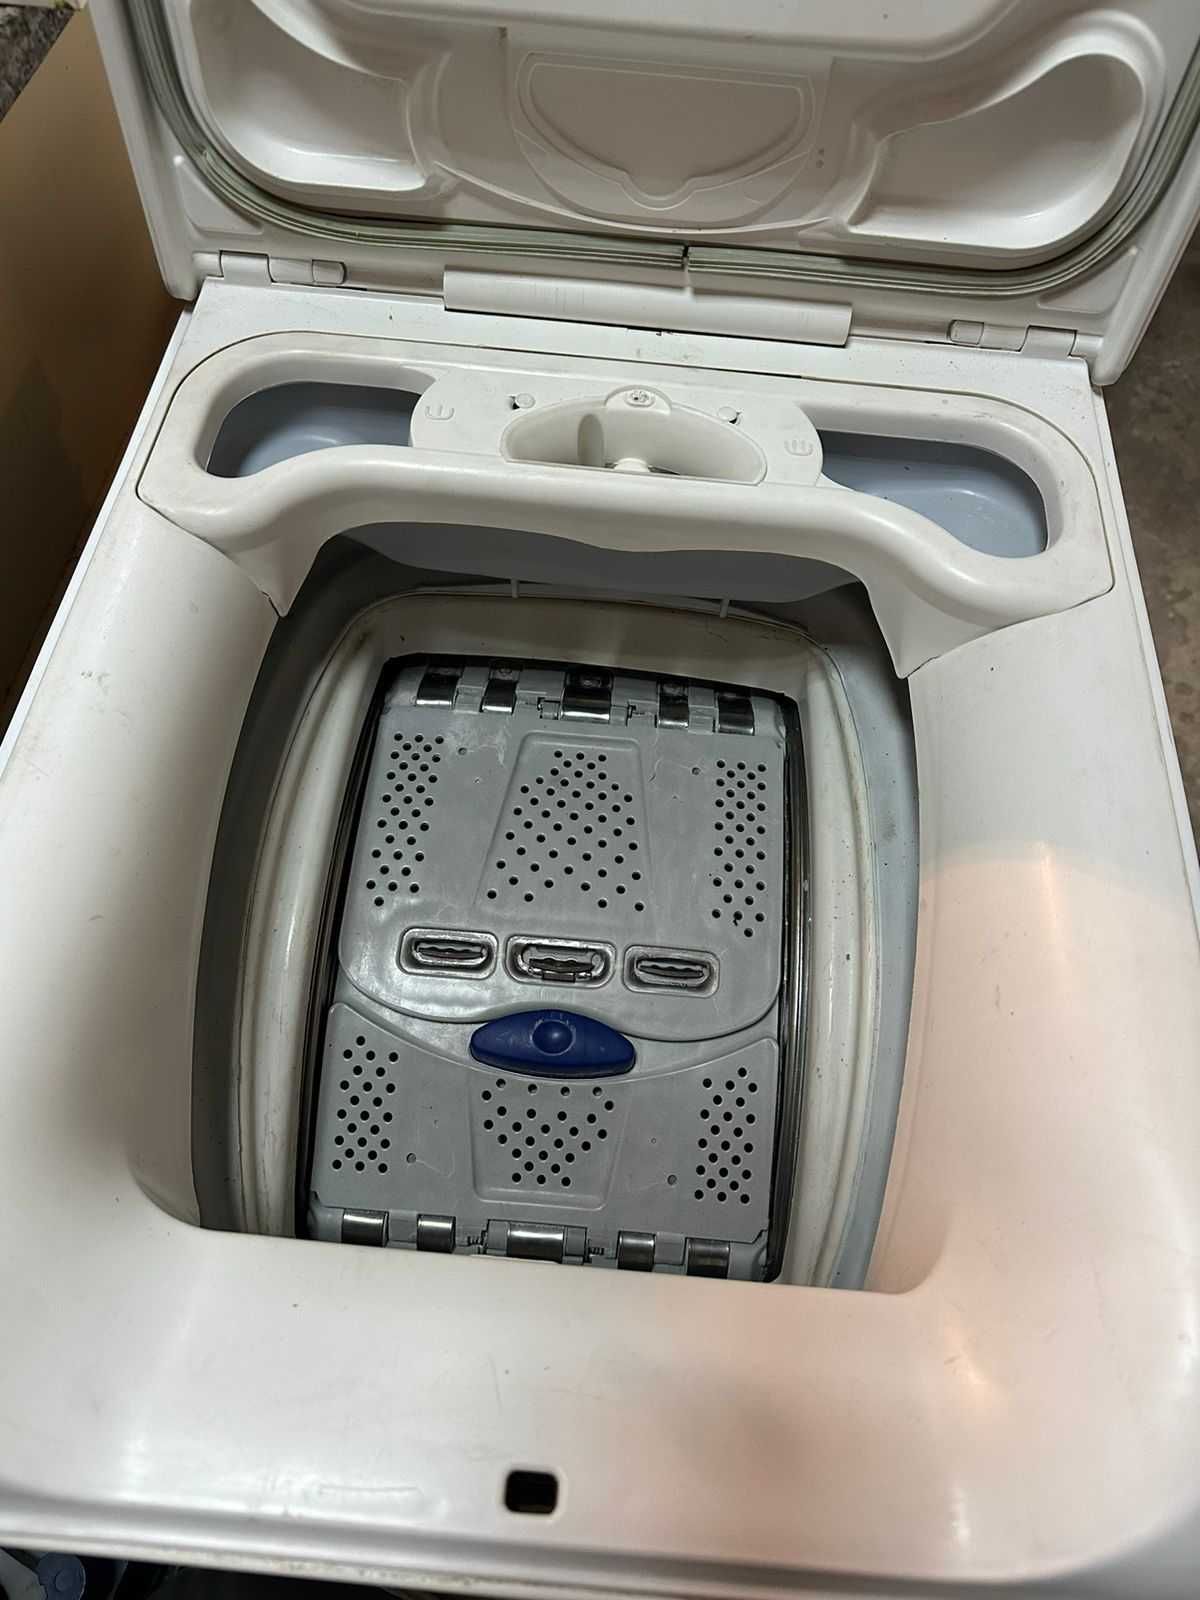 Вертикальна пральна машина Electrolux серії Inspire 5.5 кг